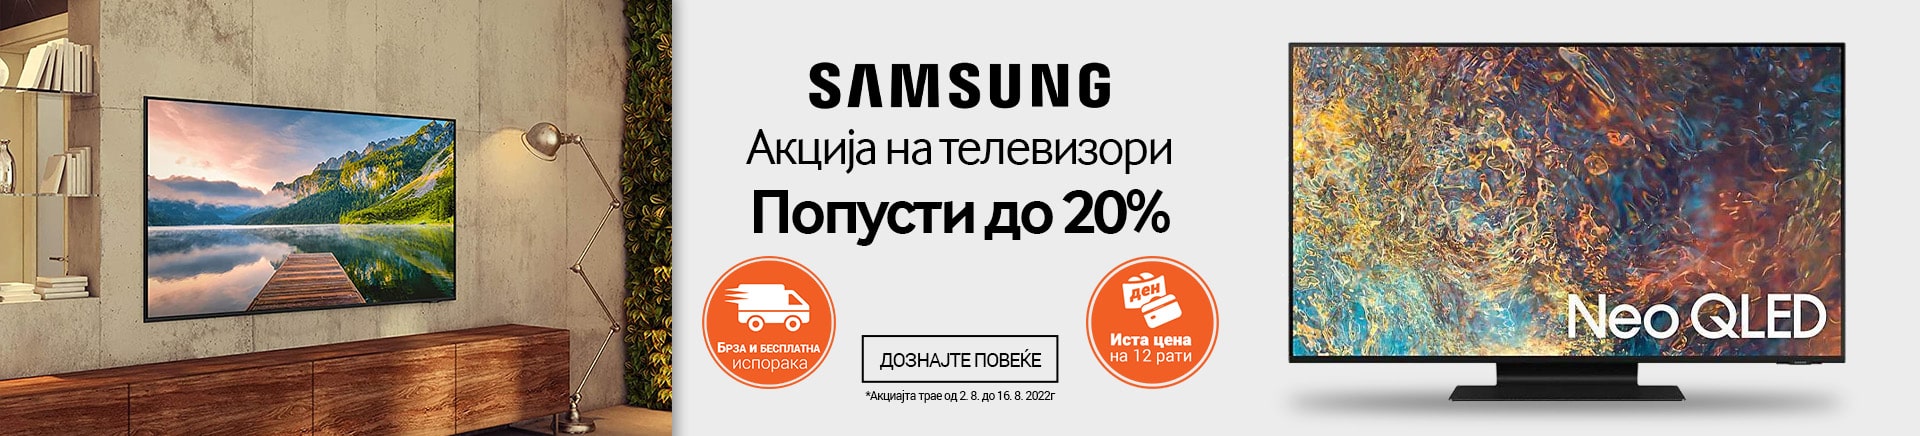 MK~Samsung TV akcija 14 dana do 20 posto DESKTOP 1200 X 436-min.jpg